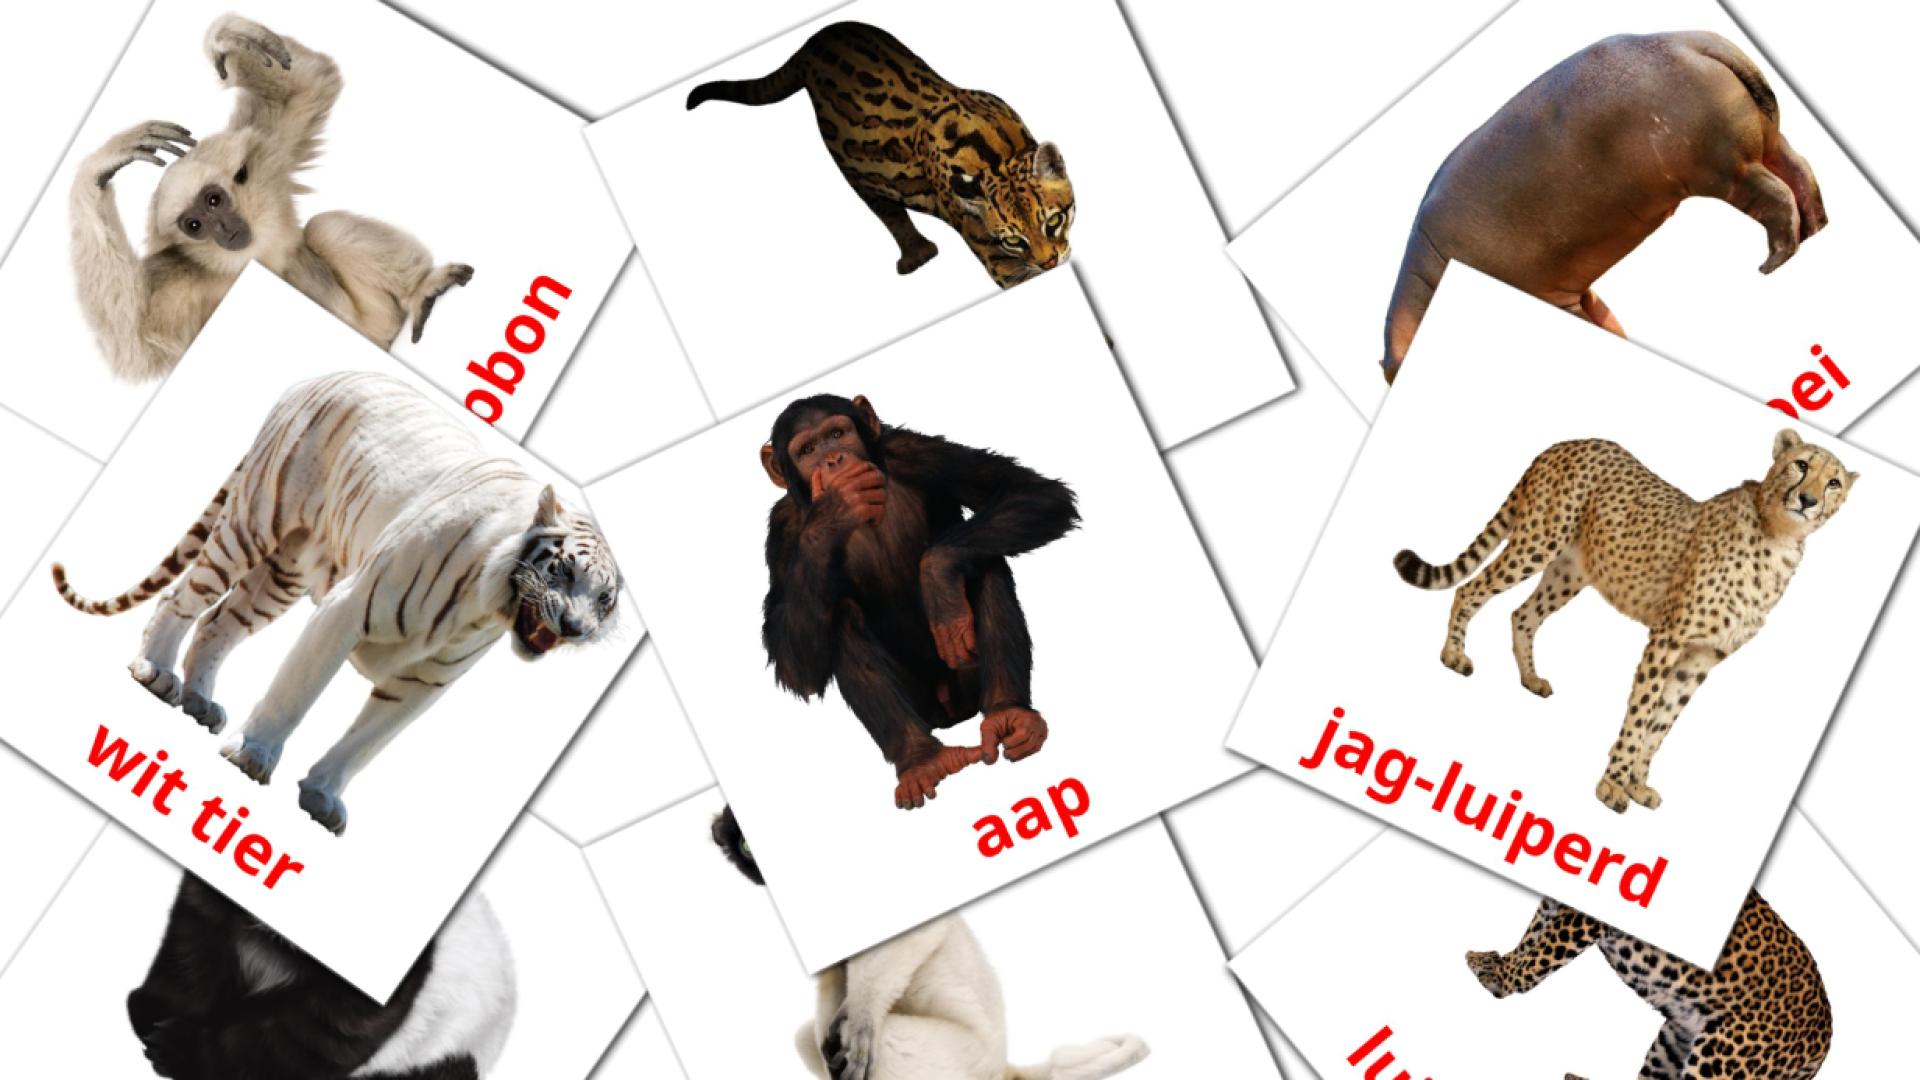 Jungle animals - afrikaans vocabulary cards